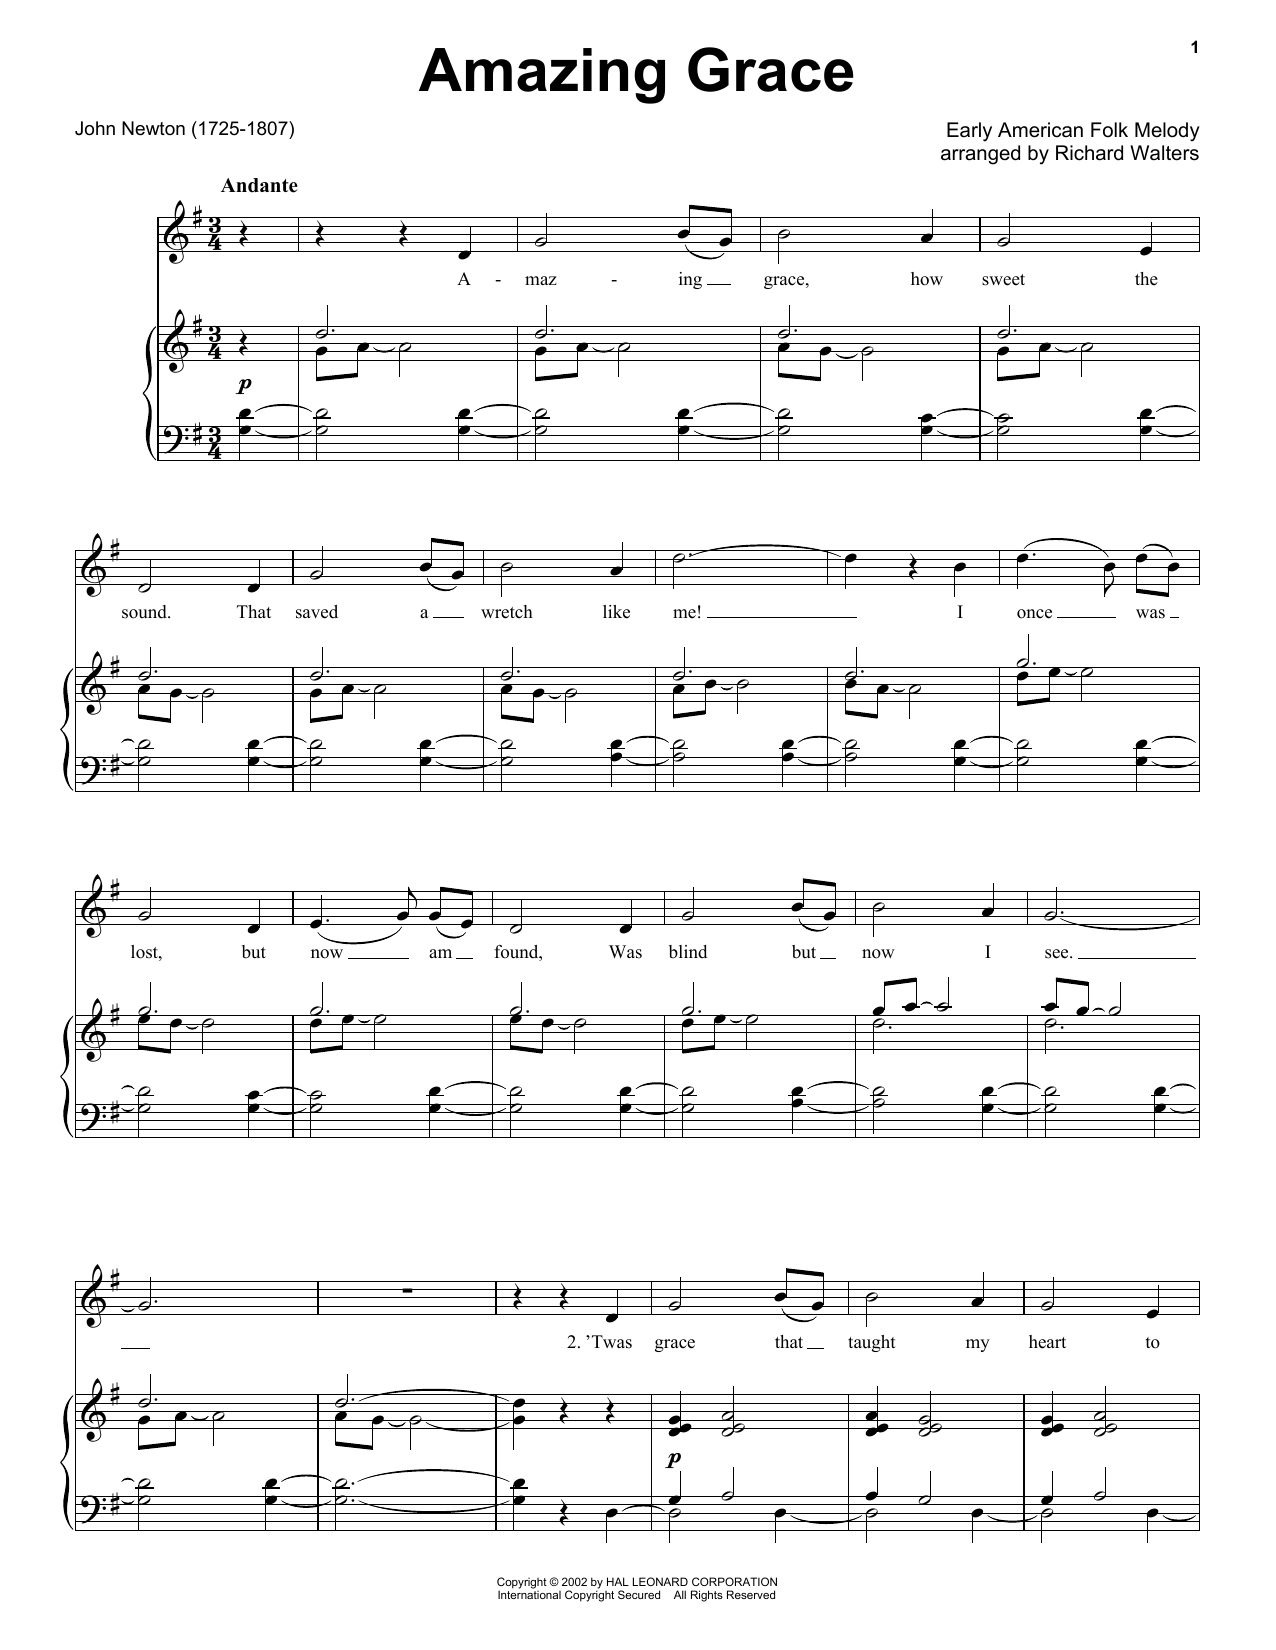 John Newton Amazing Grace Sheet Music Notes & Chords for Guitar Tab - Download or Print PDF